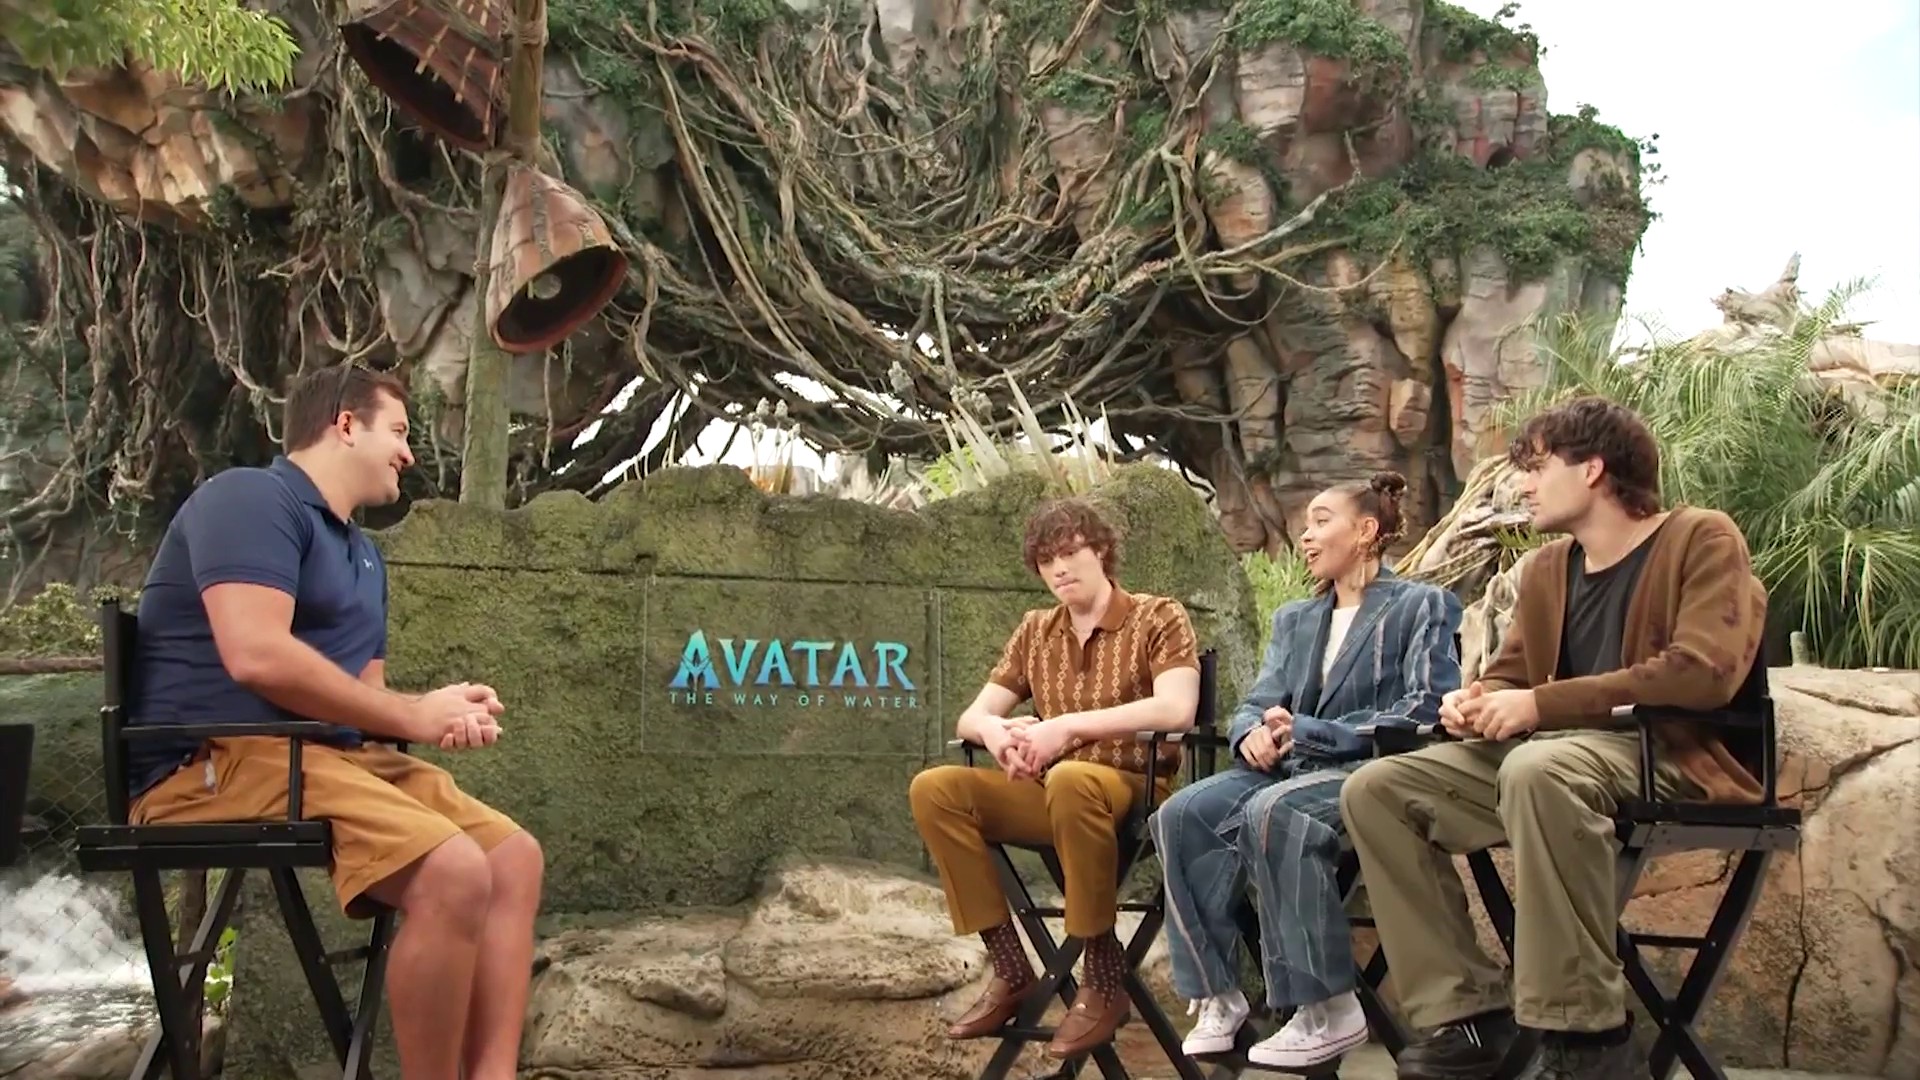 Cast of 'Avatar: The Way of Water' visit Walt Disney World, talk new film